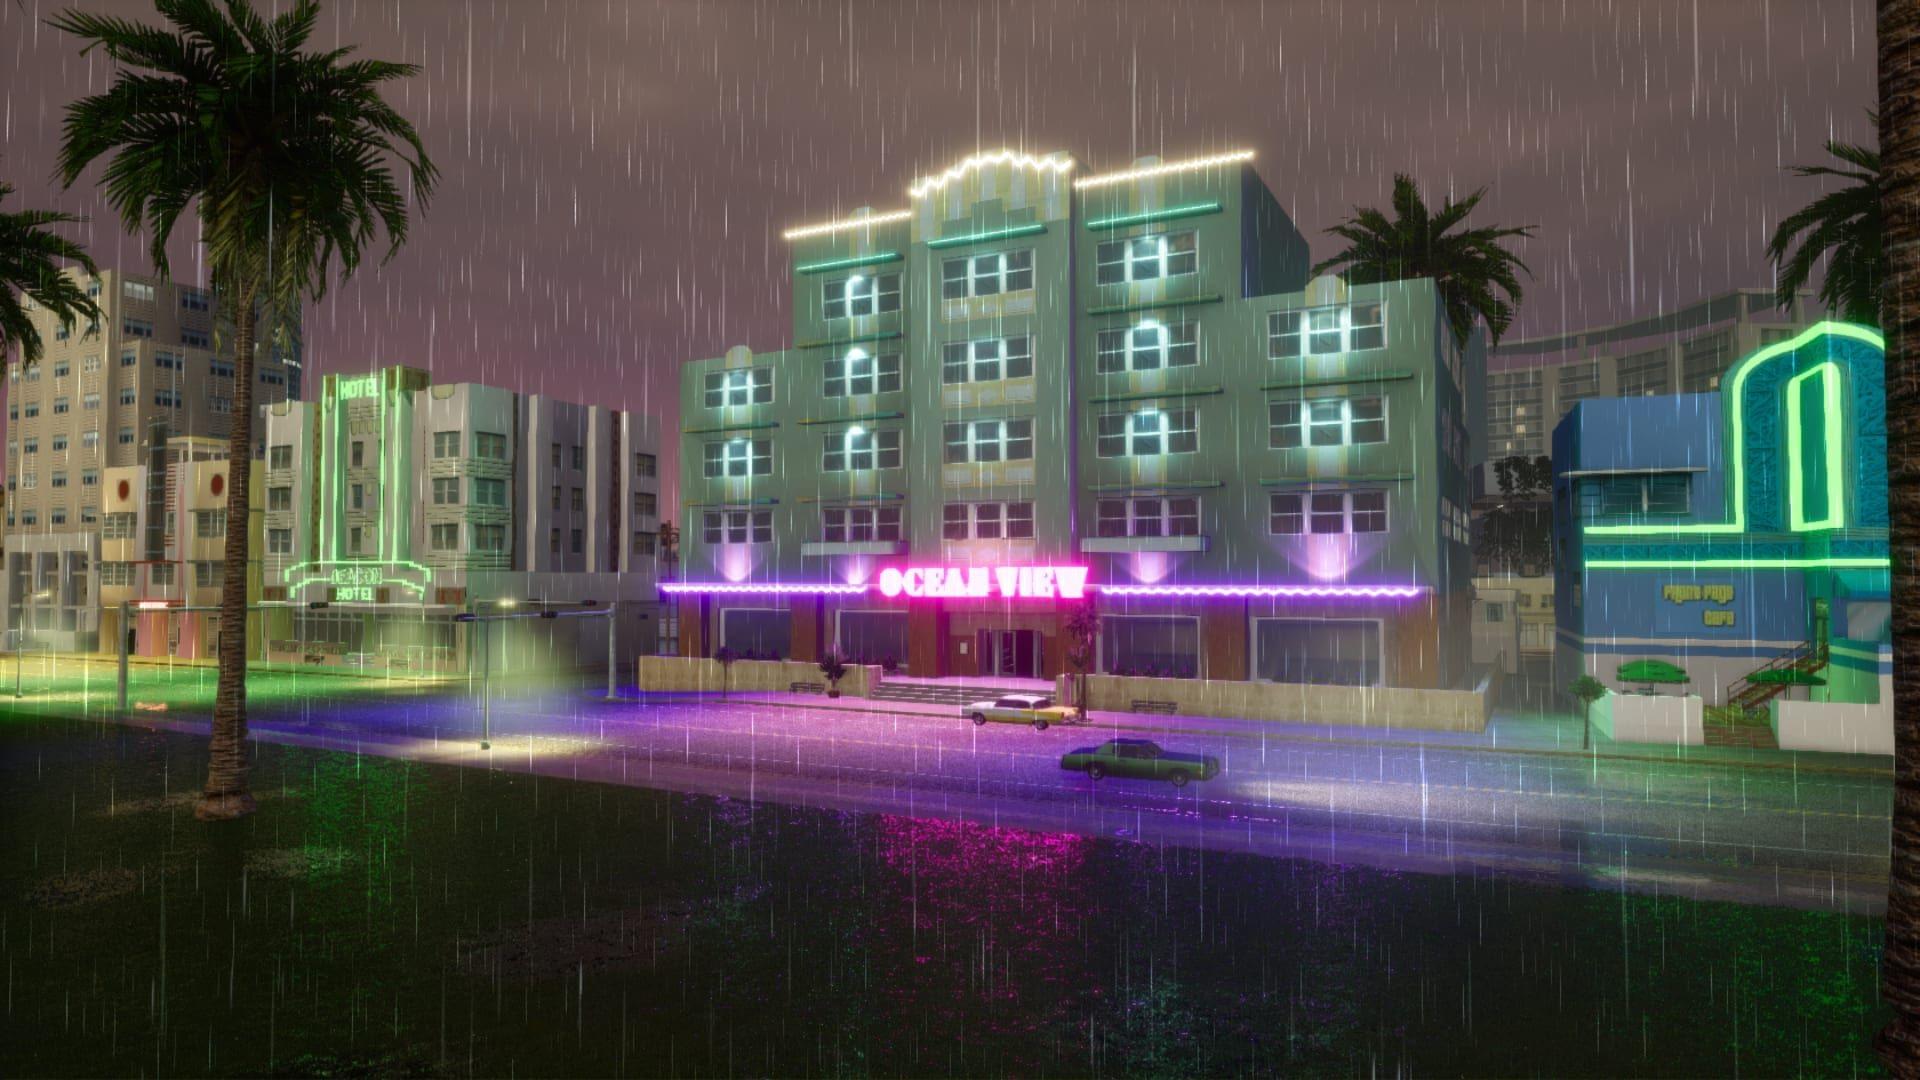 A scene from GTA: Vice City. Source: Rockstar Games.